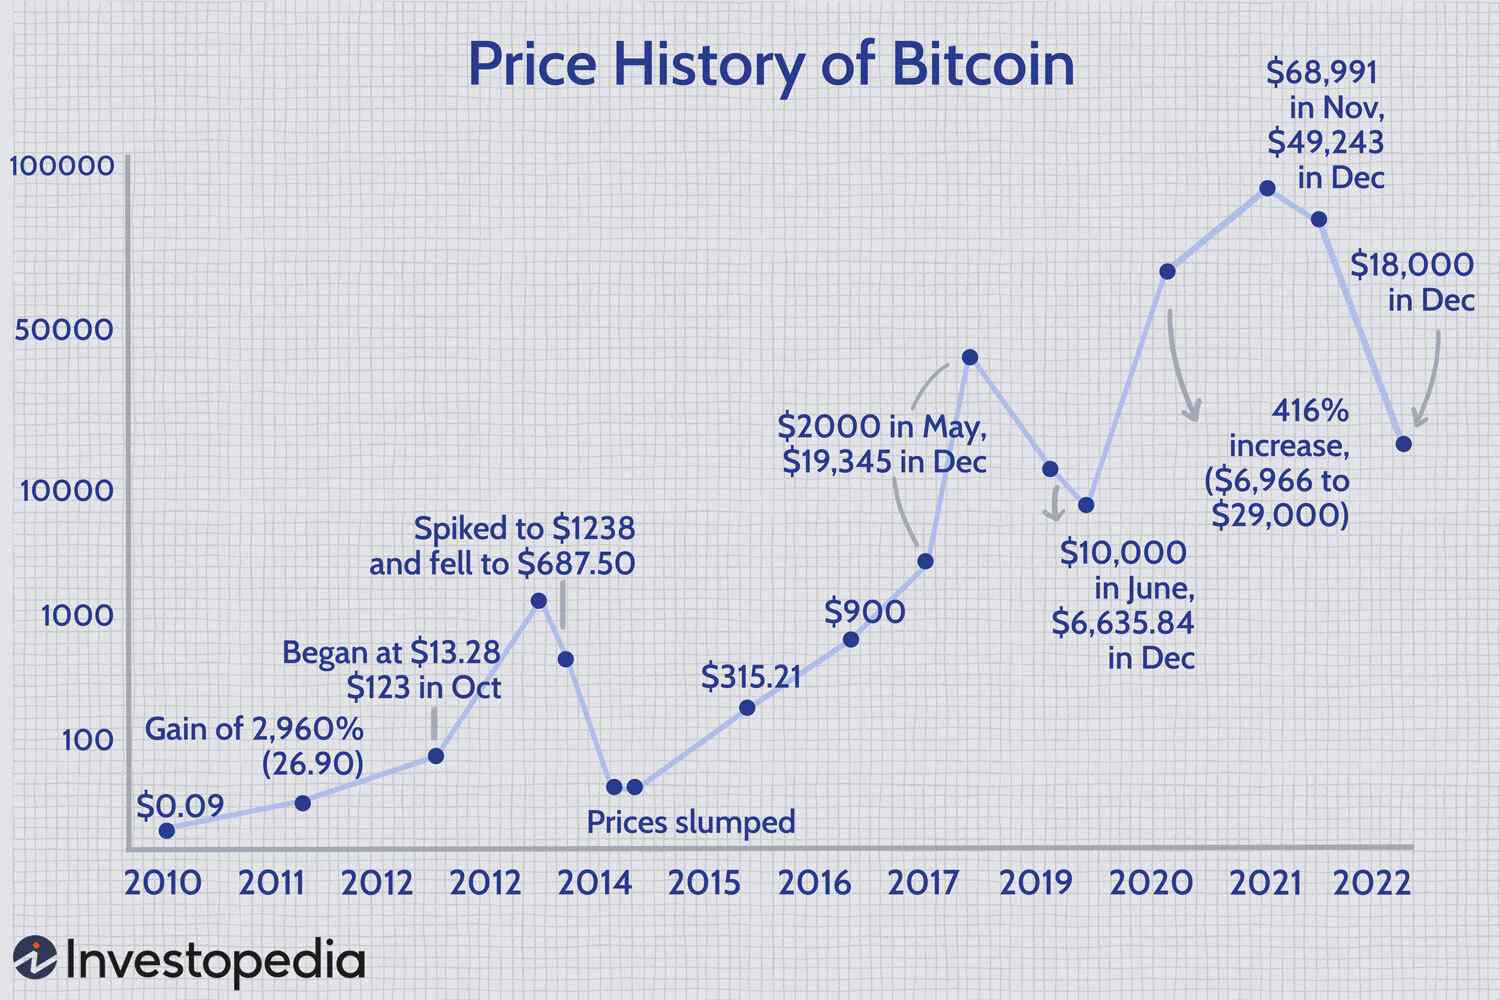 BTC Price | Crypto Price Today: BTC, ETH Remains Flat As Pepe Coin Rises